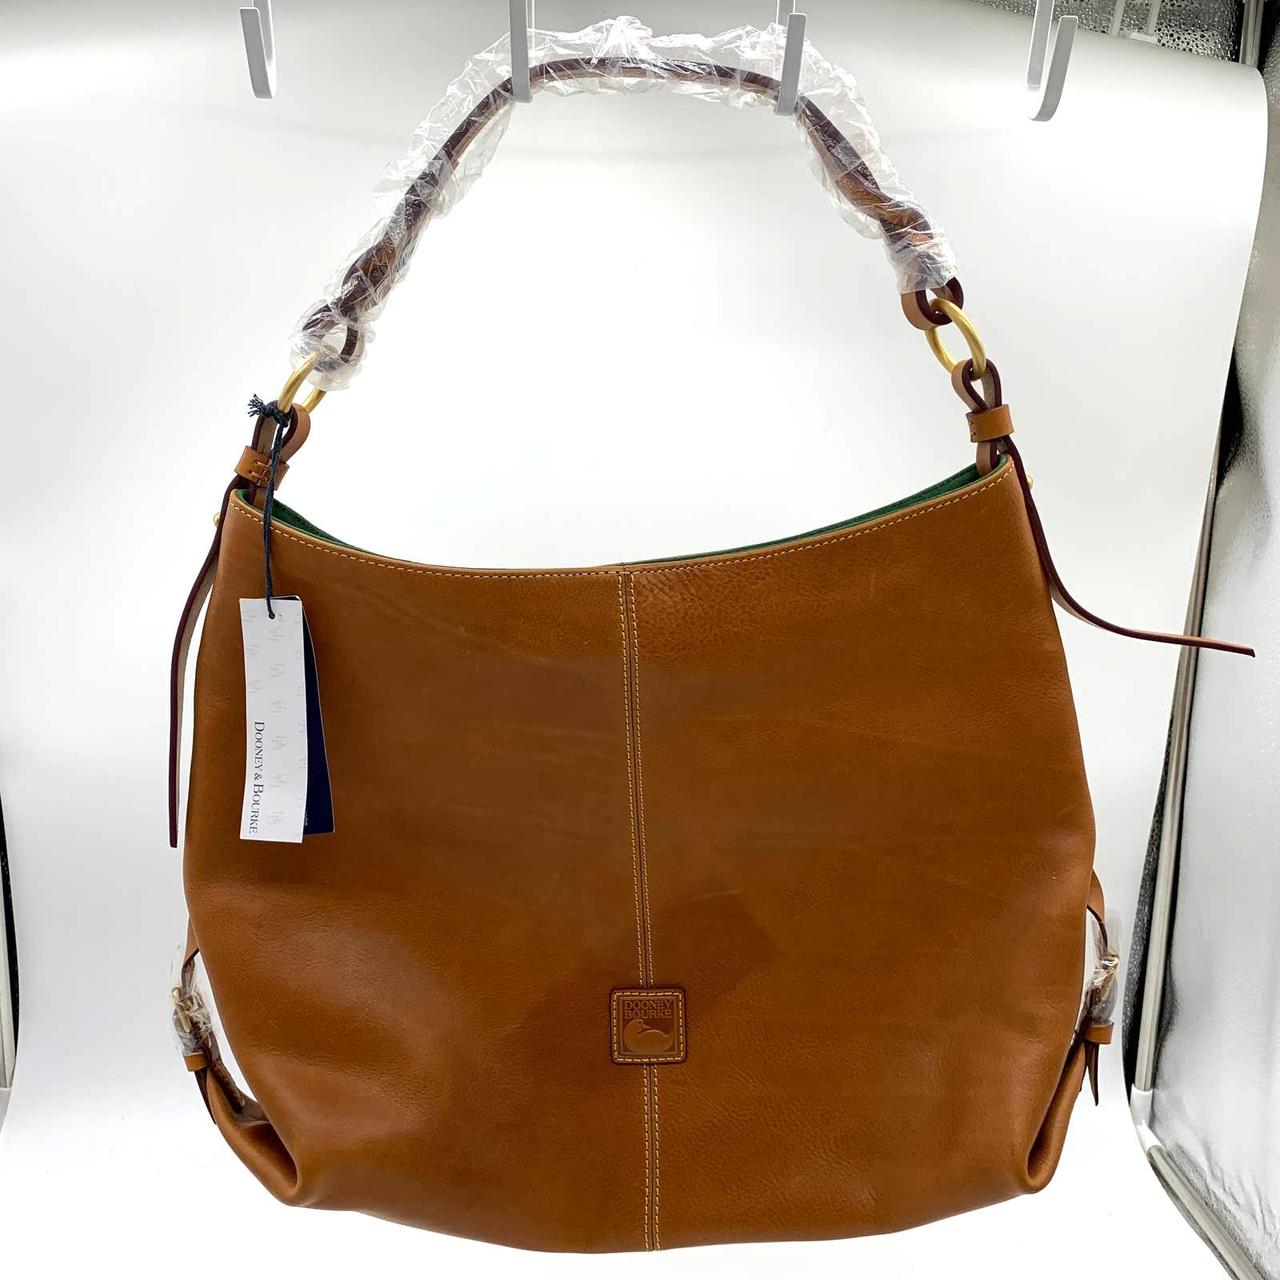 Dooney & Bourke Florentine Medium Sac with Twisted Strap Shoulder Bag